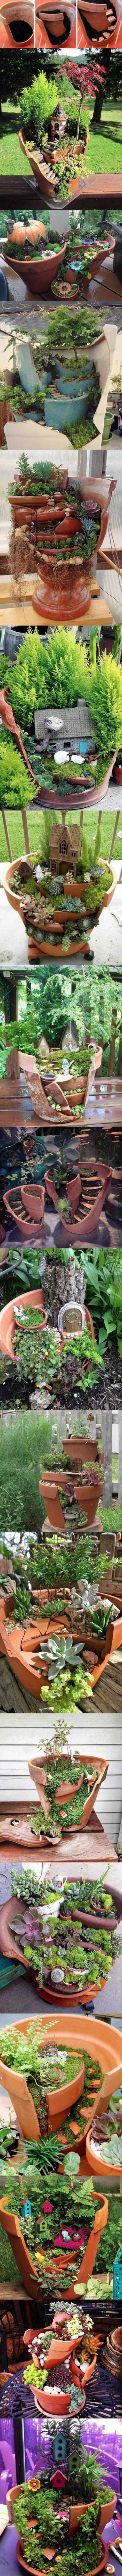 the coolest plant pots funny picture